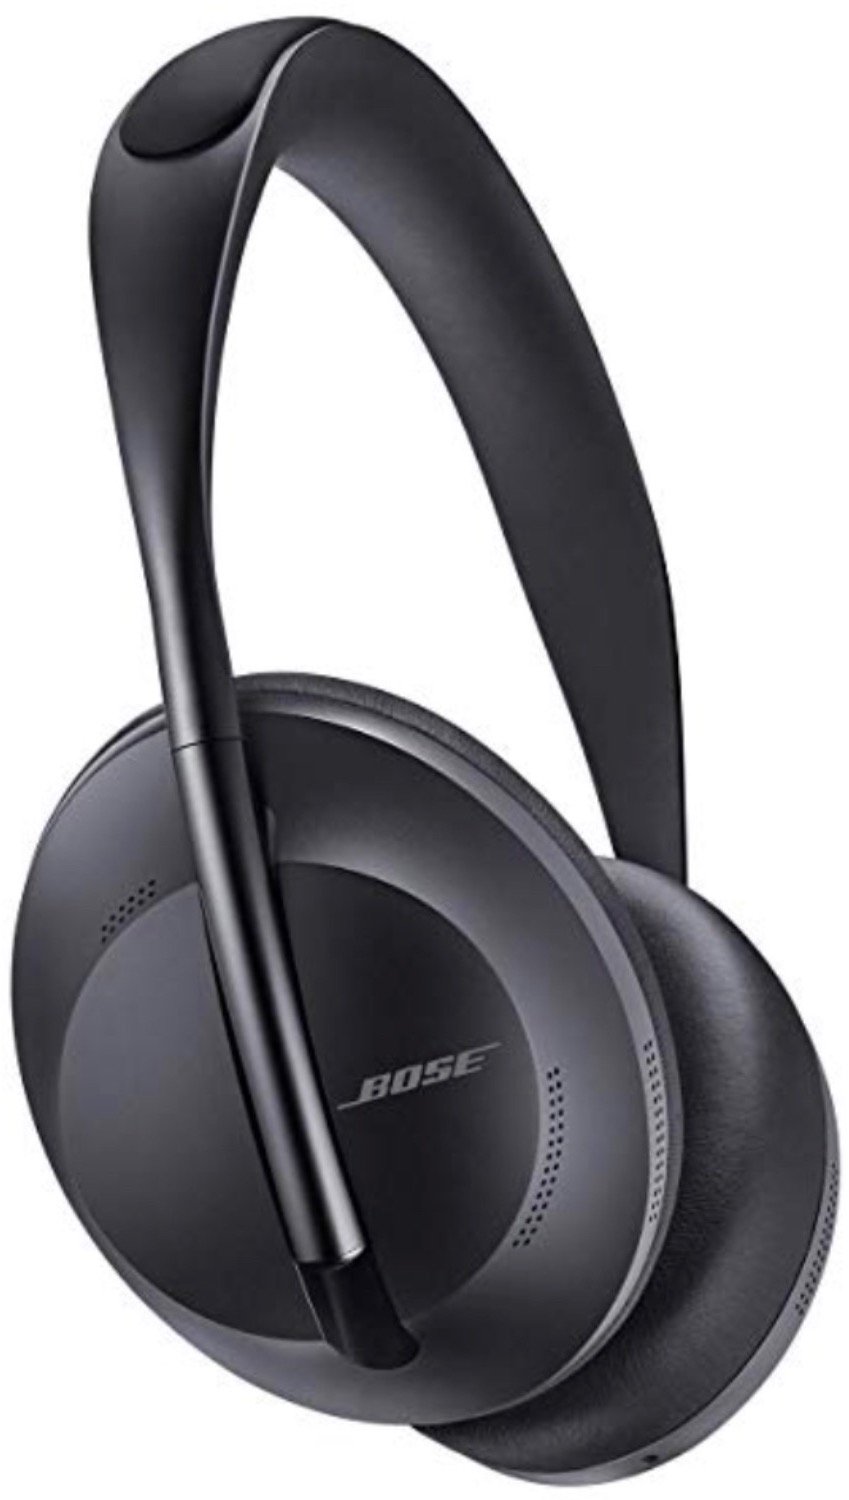 Bose Noise Cancelling Headphones 700 render